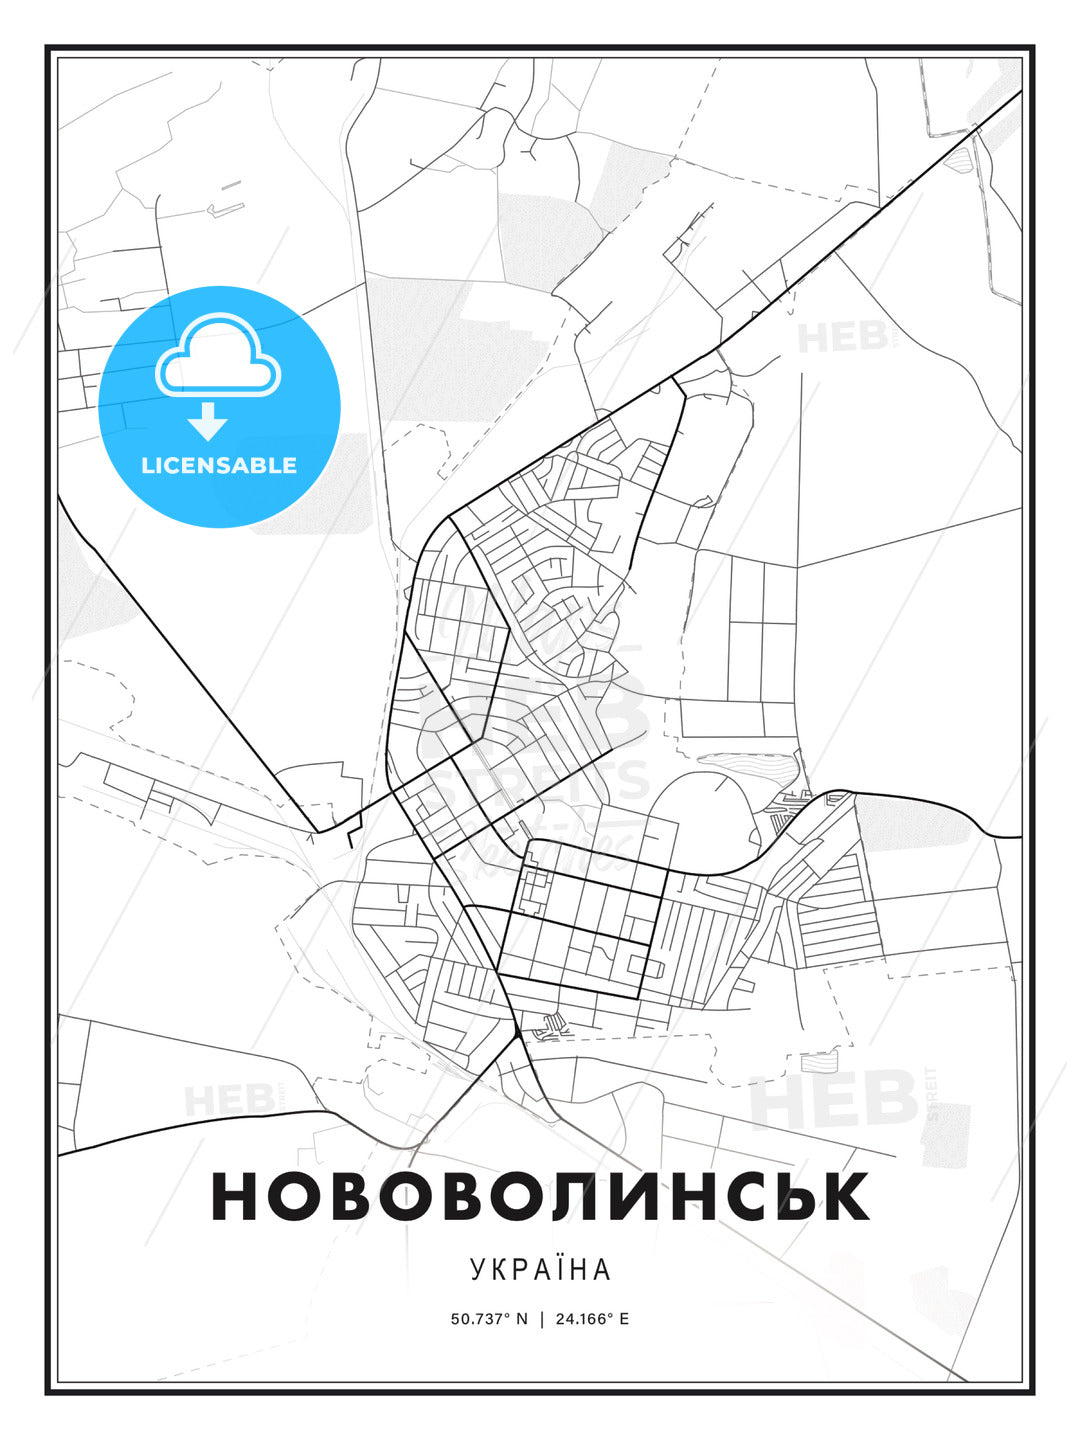 НОВОВОЛИНСЬК / Novovolynsk, Ukraine, Modern Print Template in Various Formats - HEBSTREITS Sketches